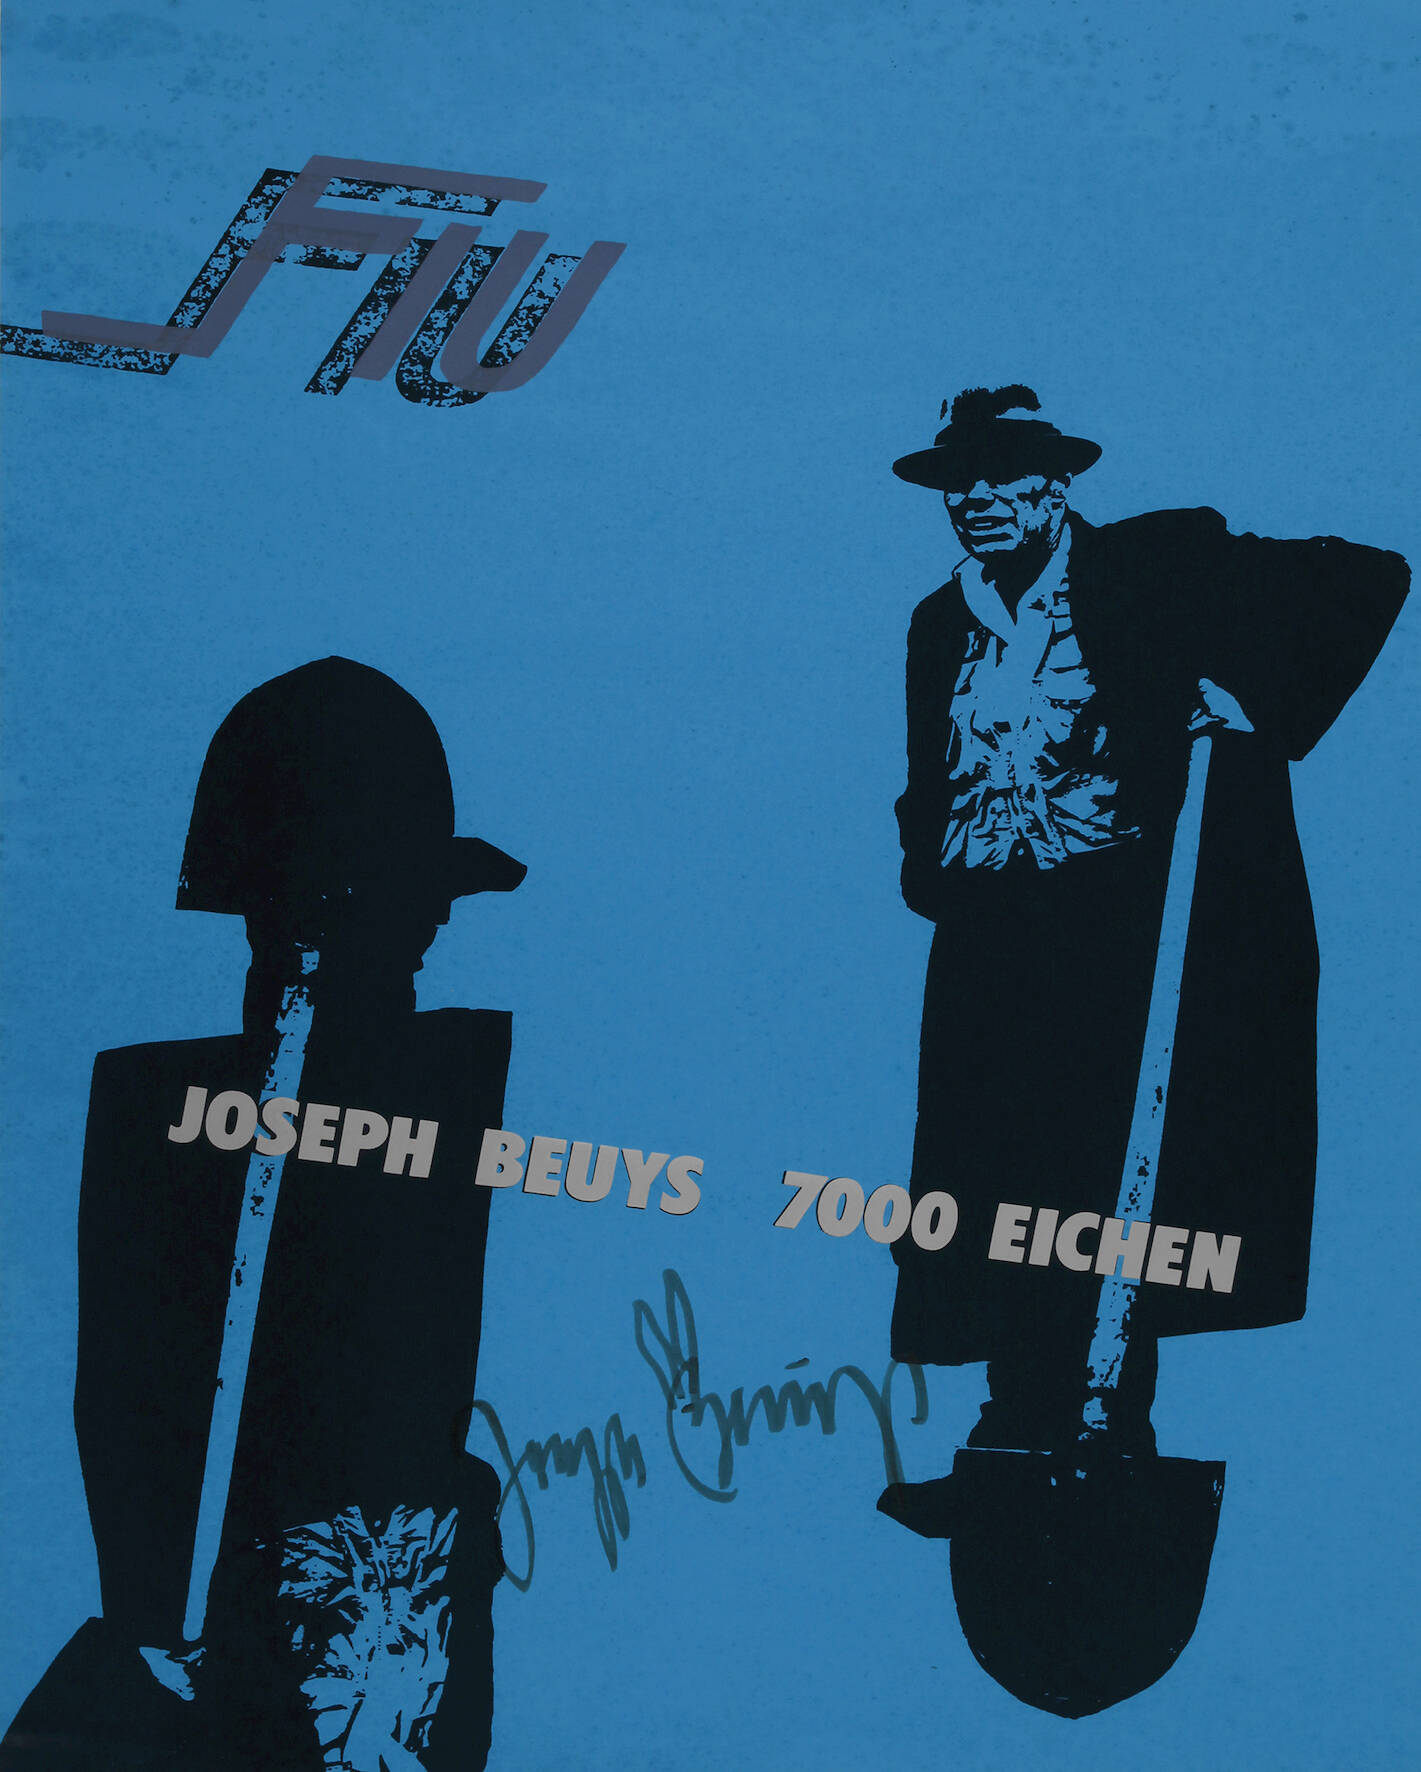 Josef Beuys Plakat "FIU 7000 Eichen"